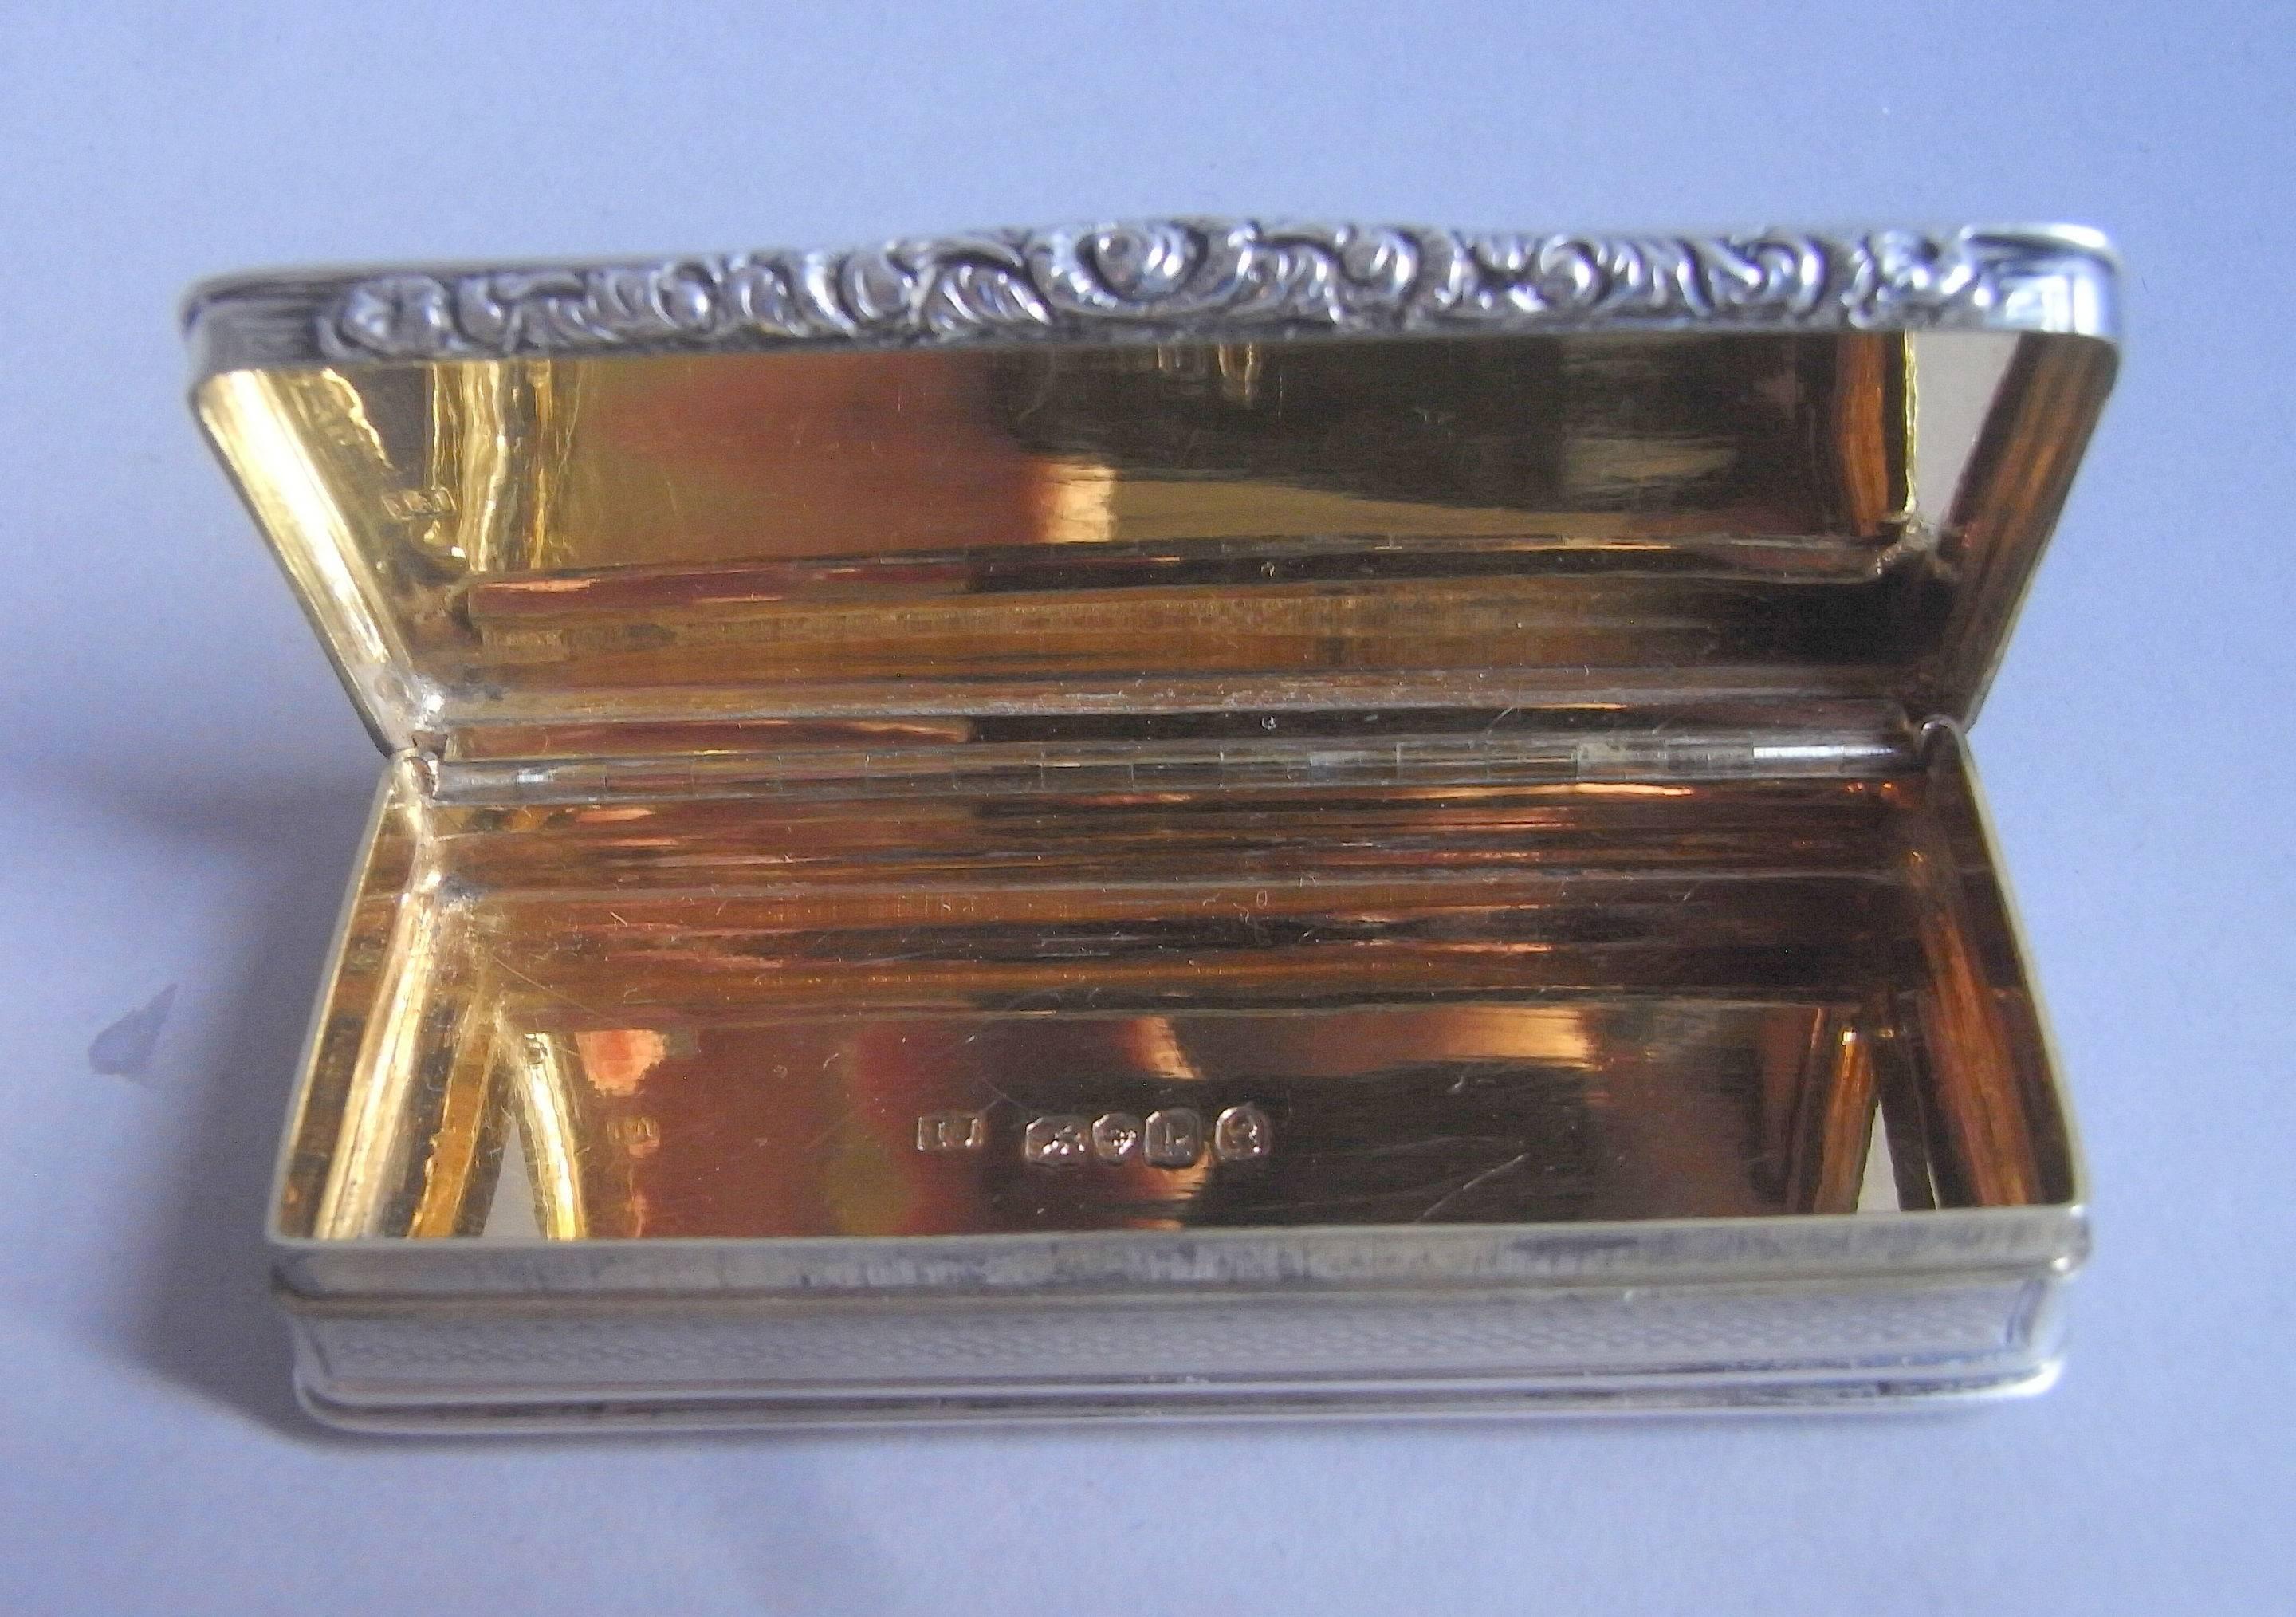 English Very Rare George IV Pocket Snuff Box Made in London in 1825 by John Jones III